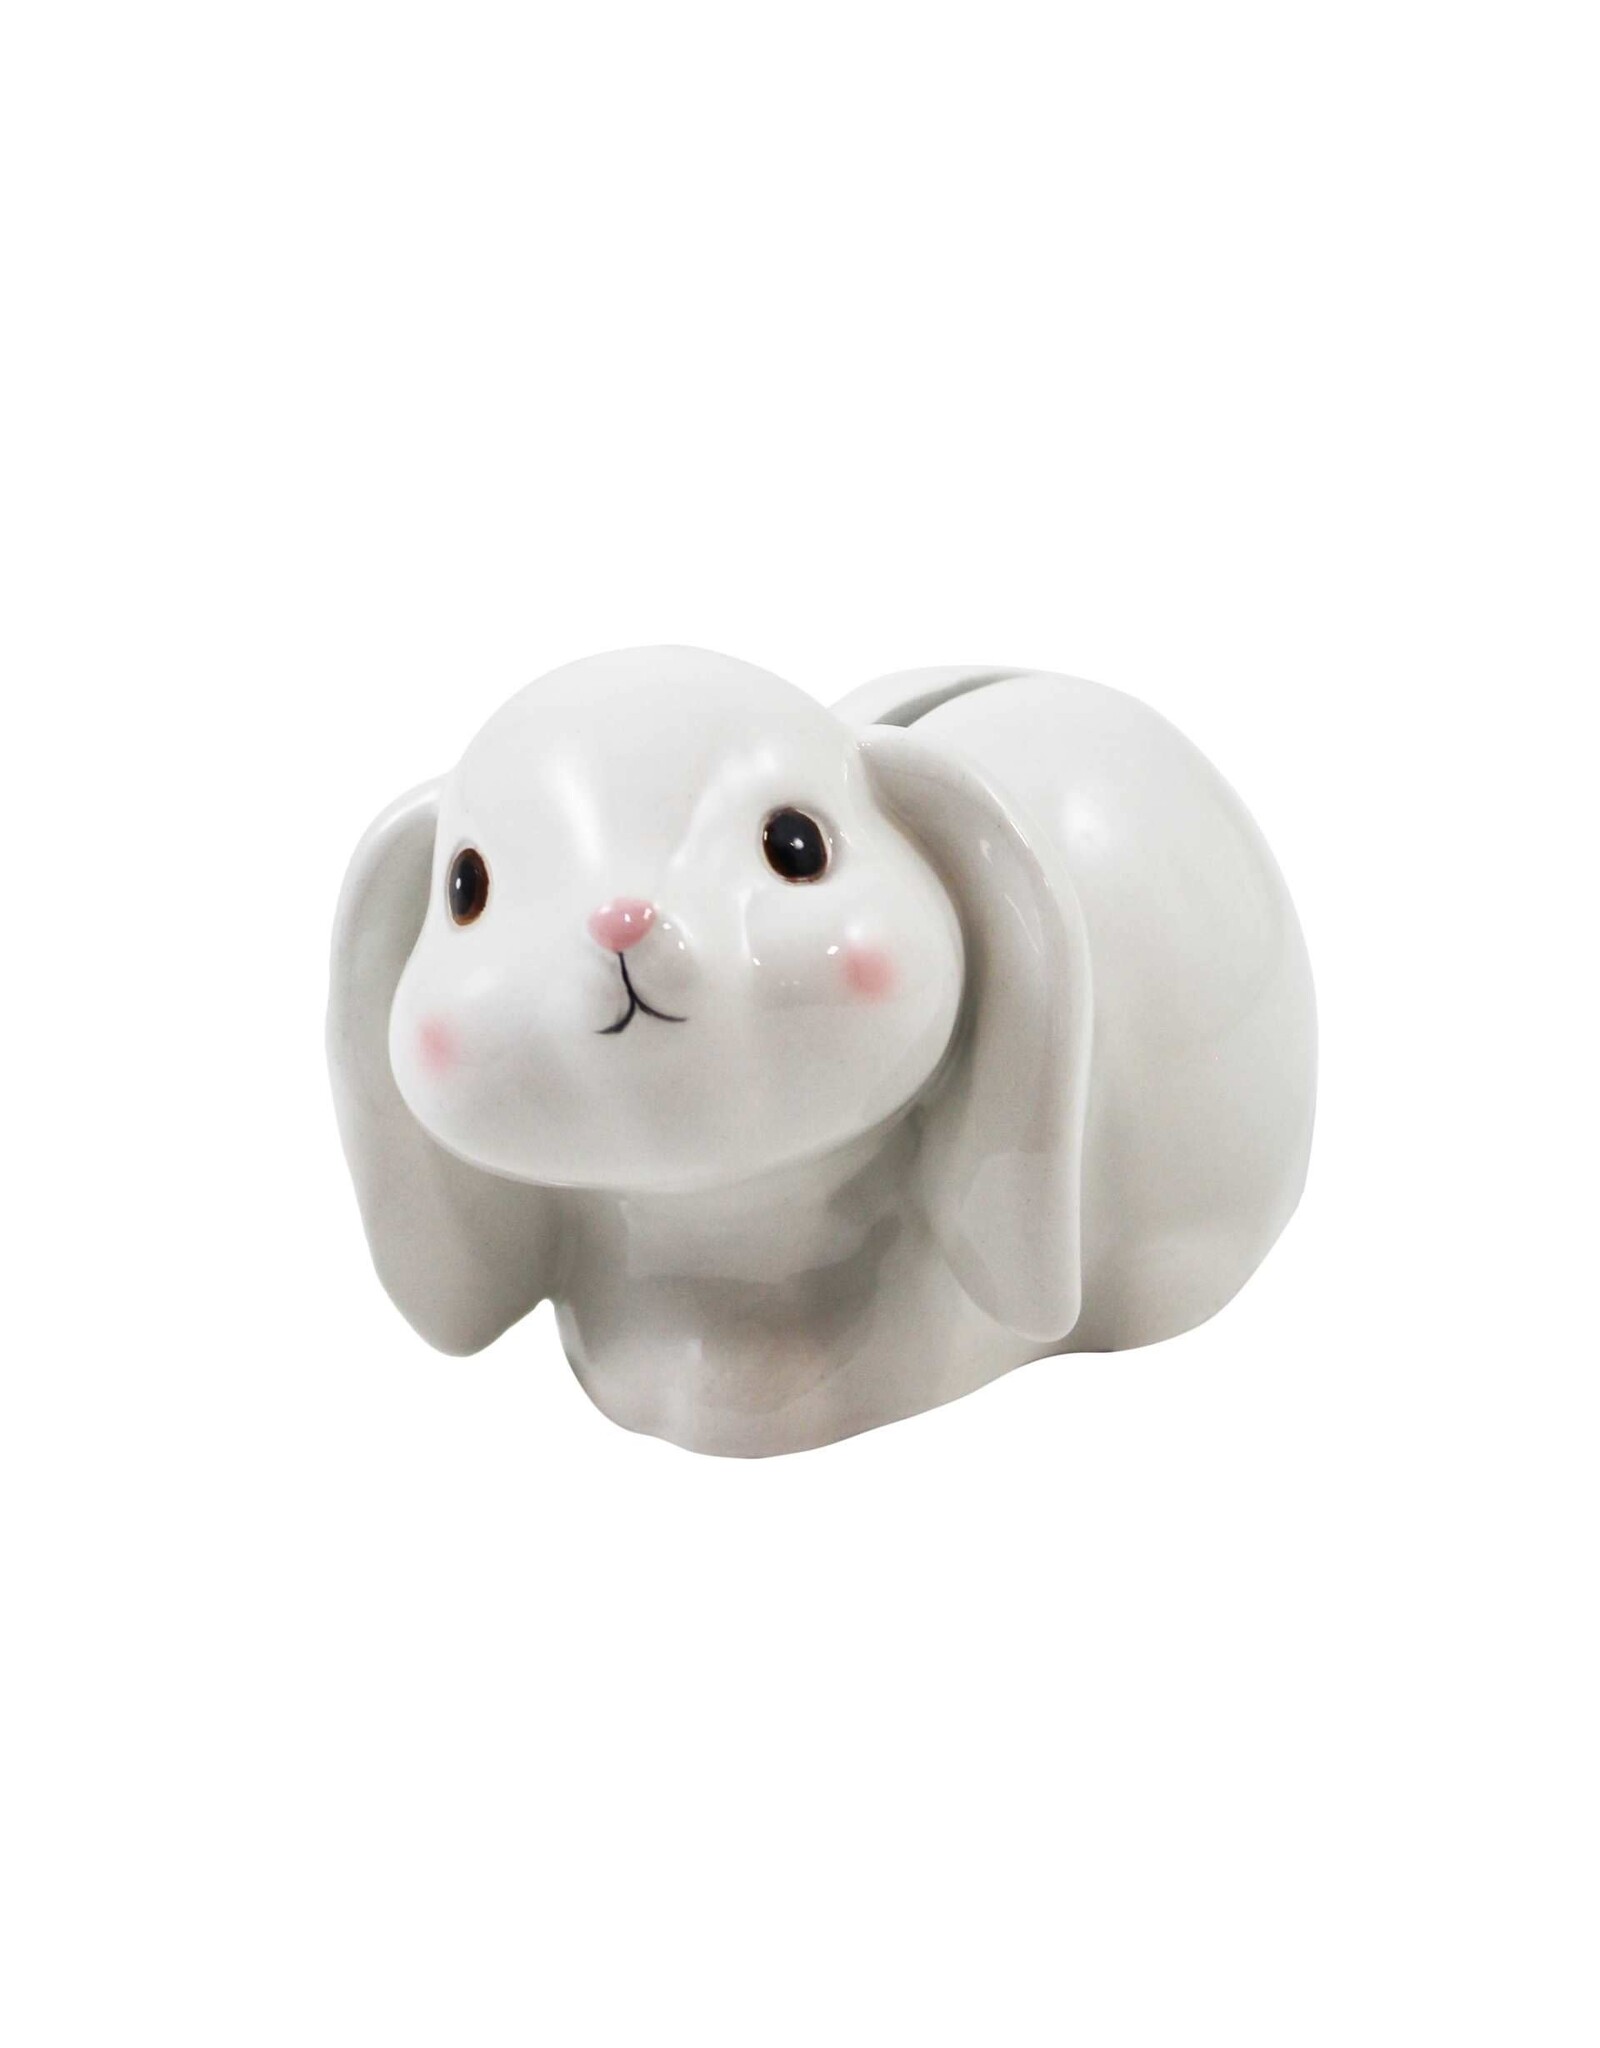 Ceramic White Lop Bunny Bank